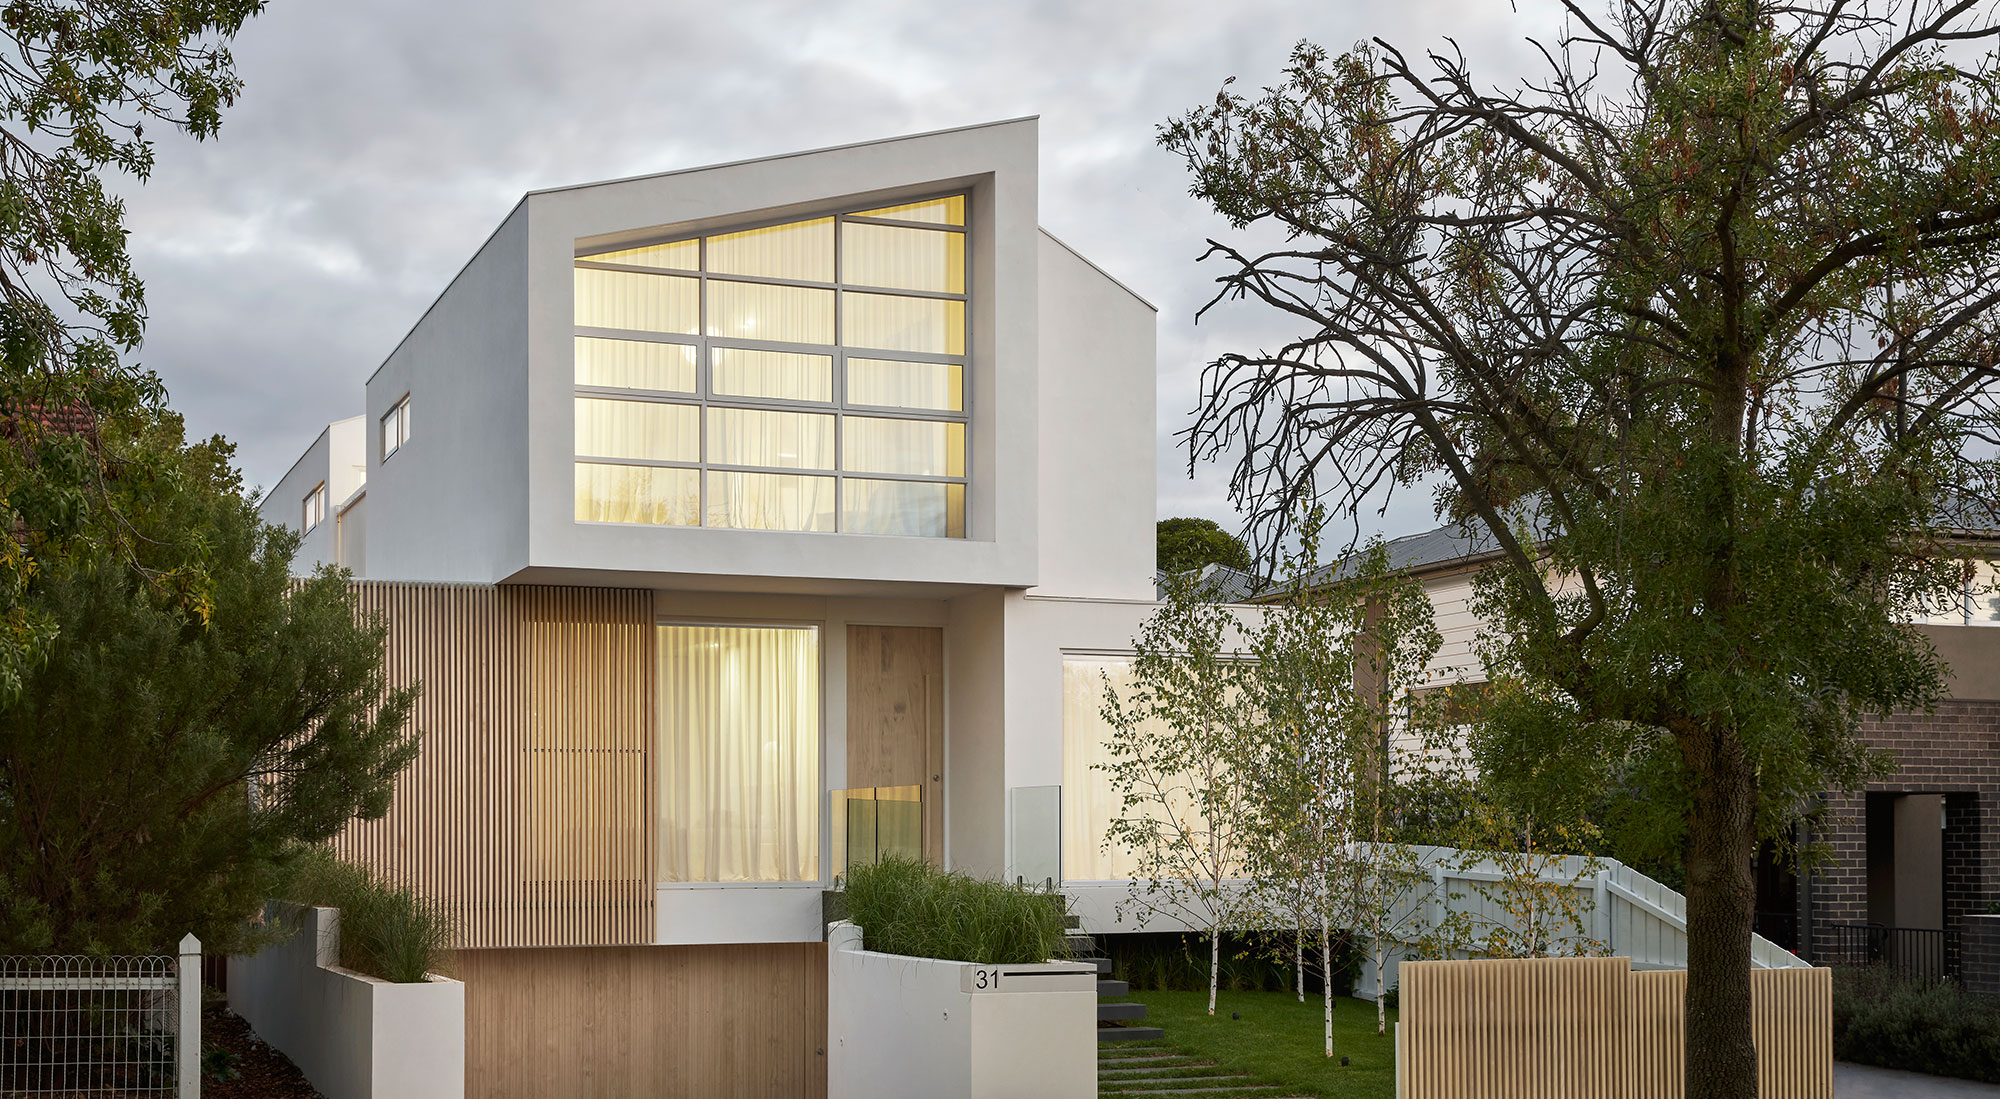 minimalist white modern house design exterior by c.kairouz architects